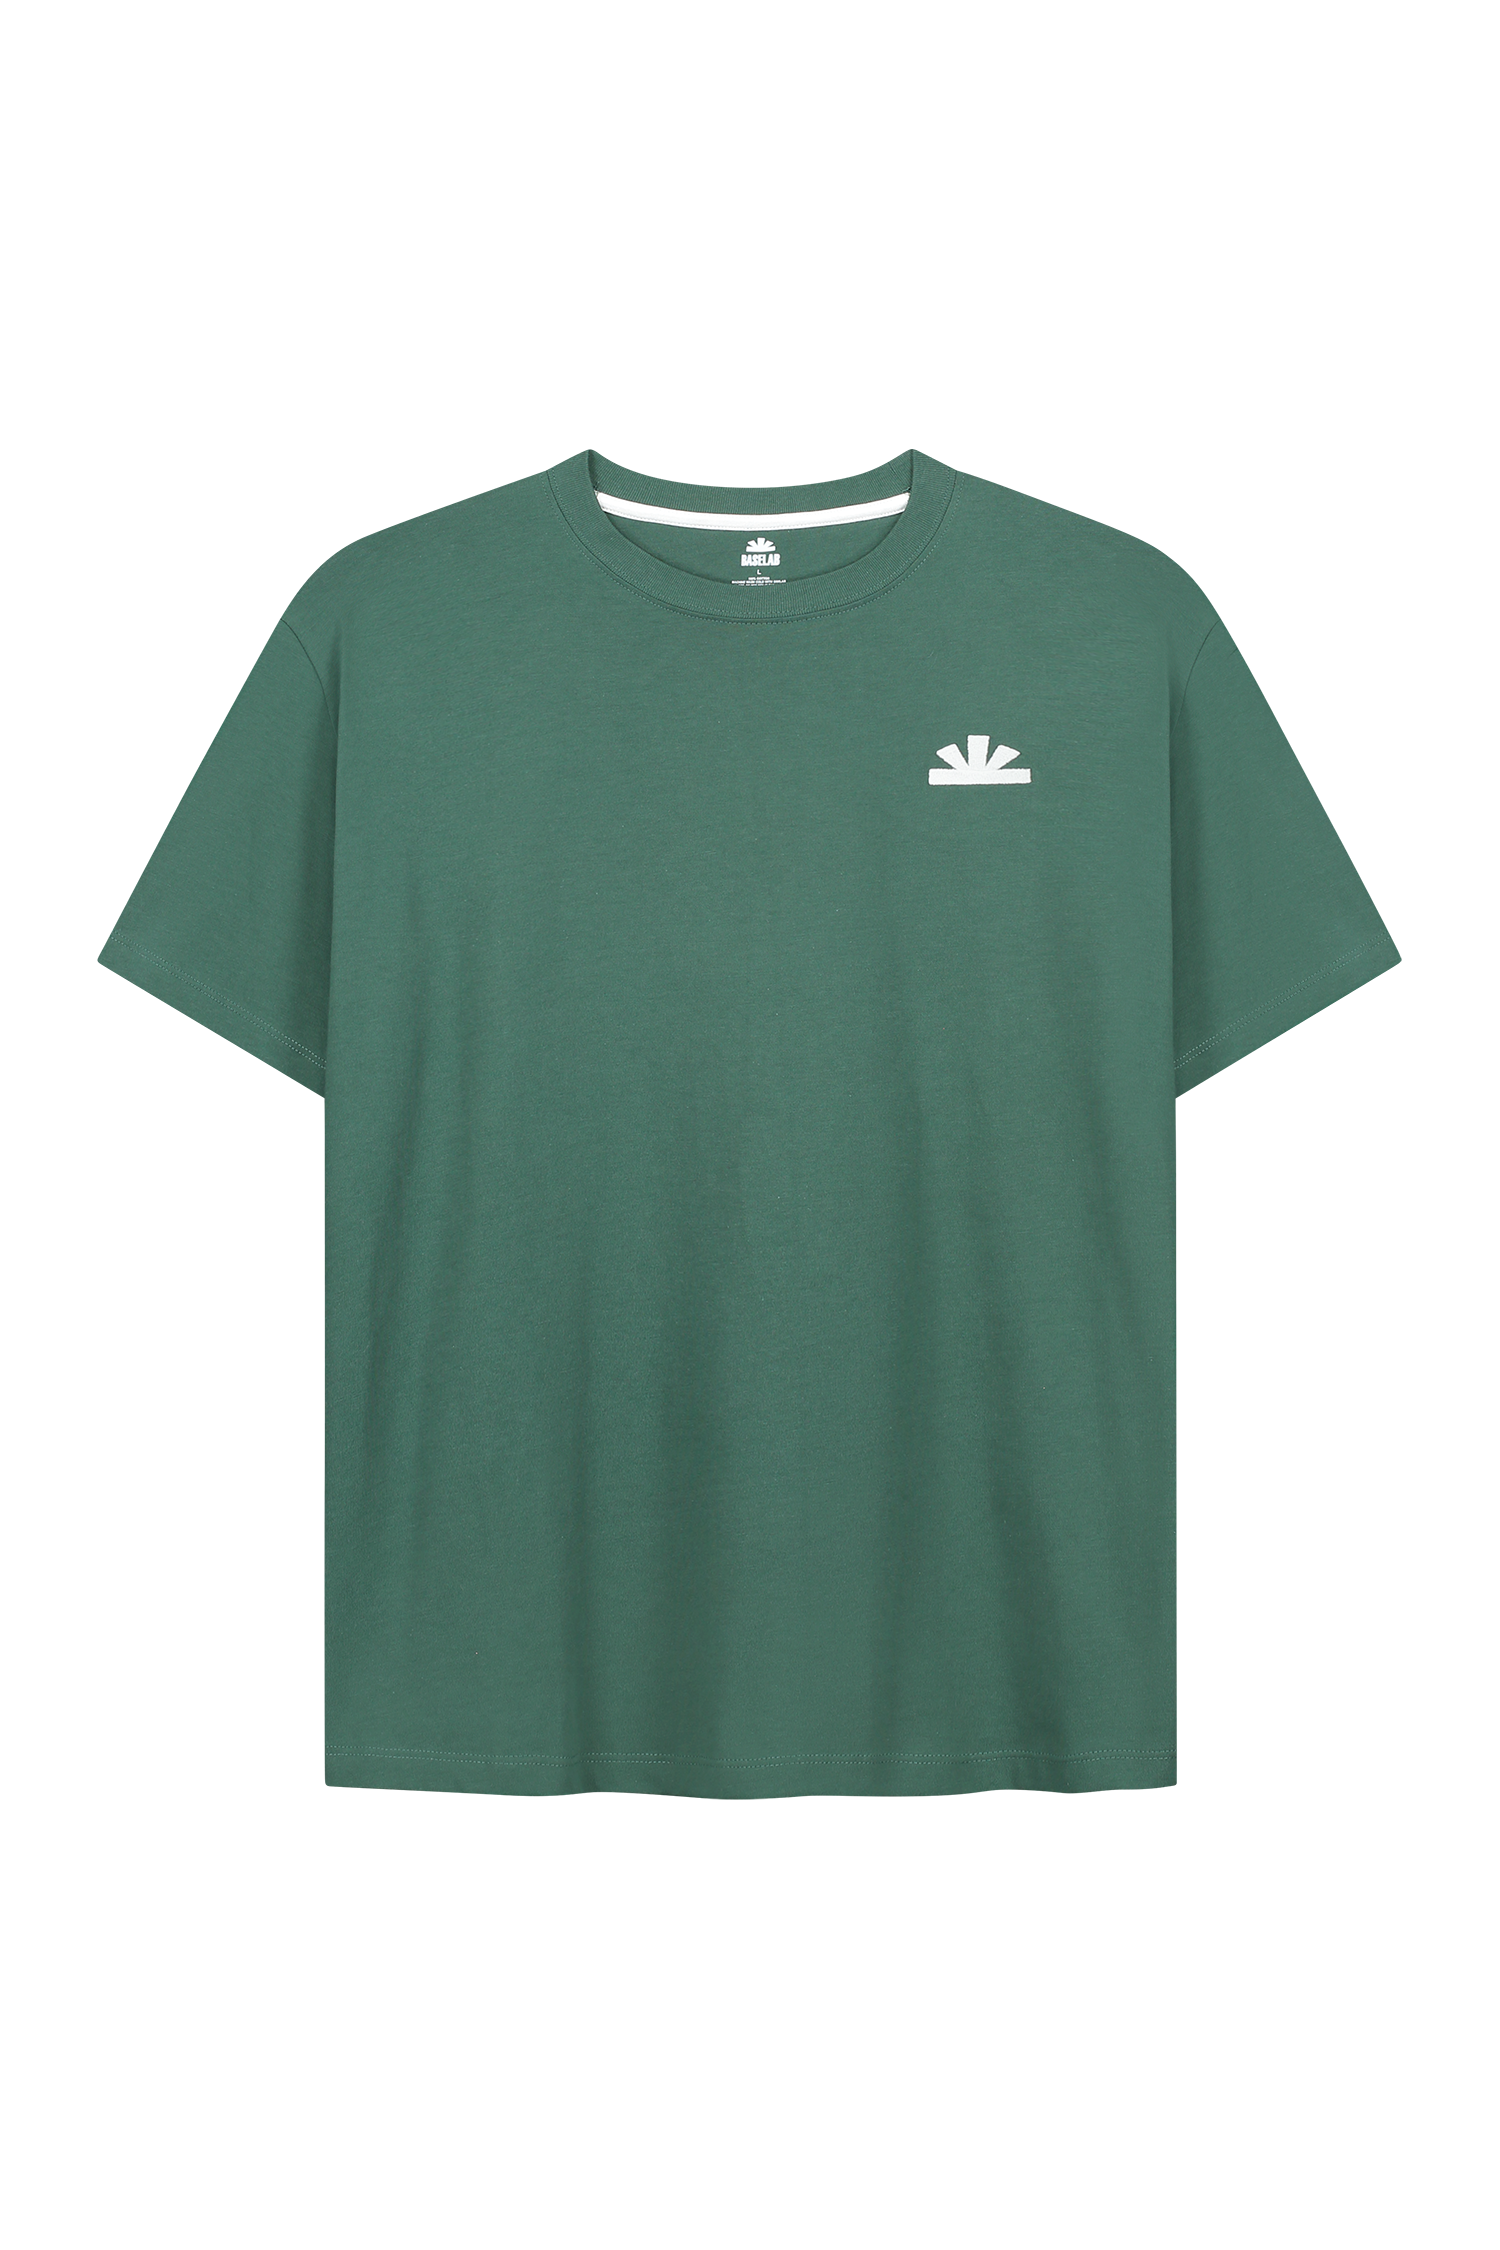 Sunrise T-shirt grün